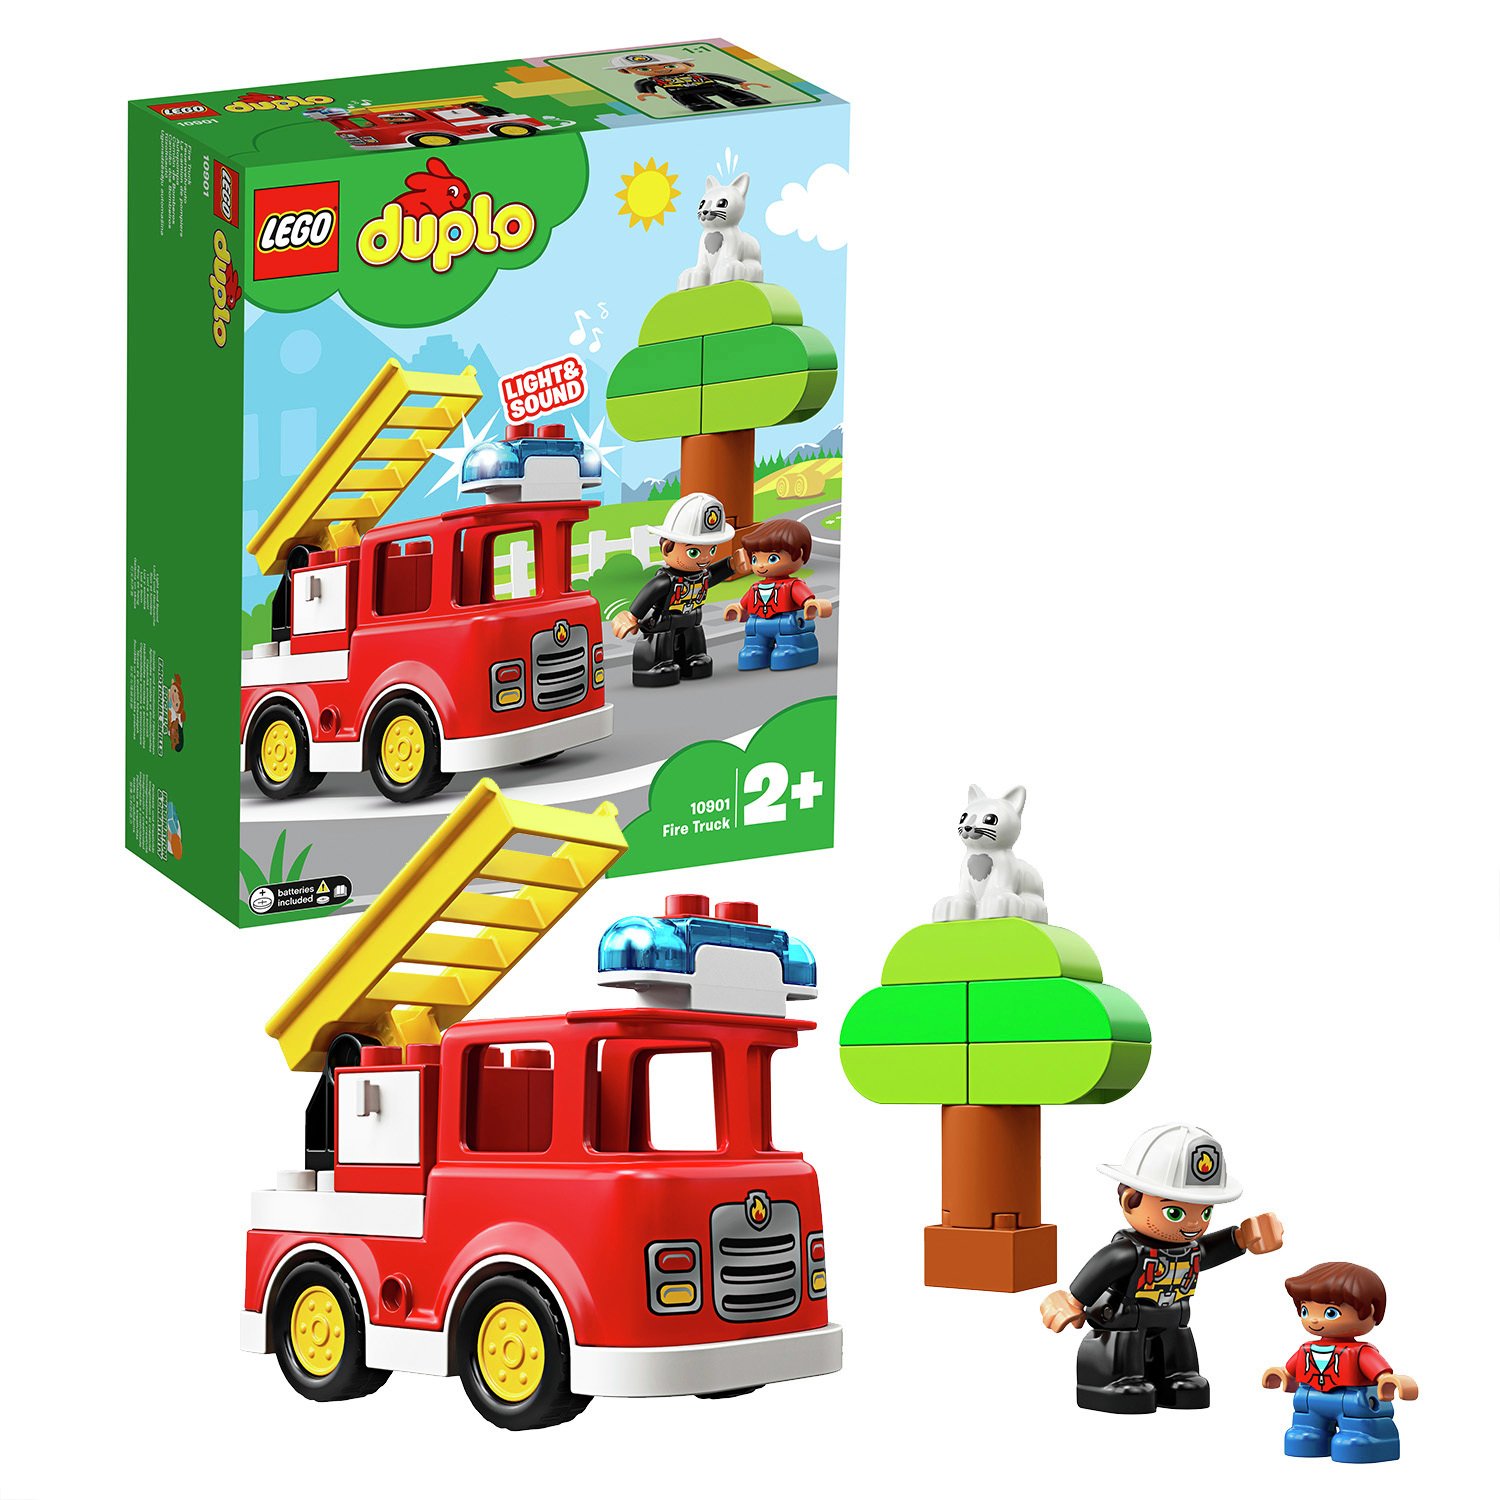 LEGO DUPLO Fire Toy Truck - 10901